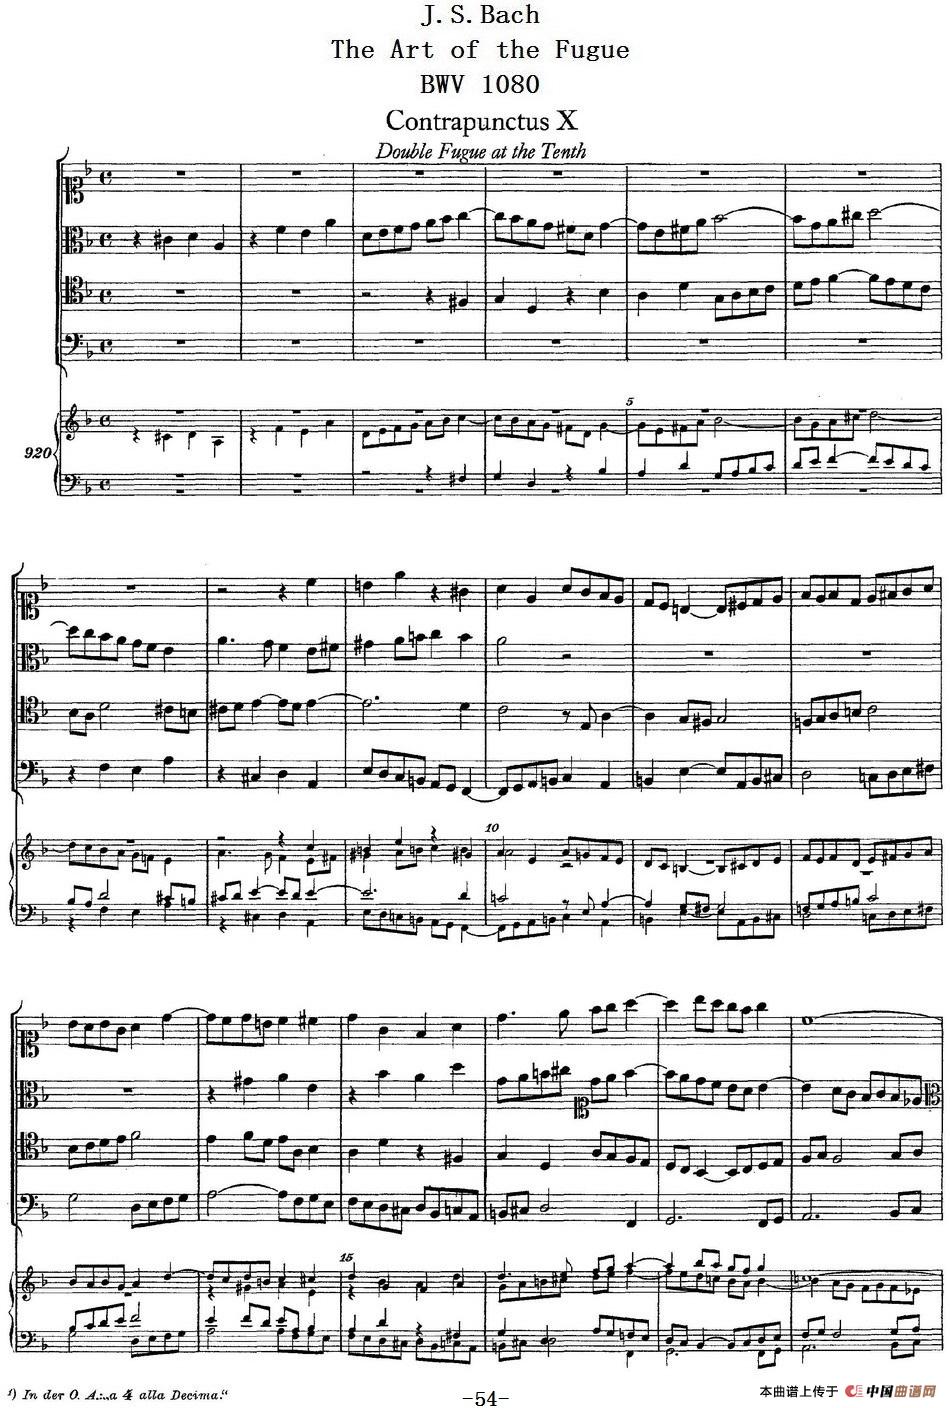 The Art of the Fugue BWV 1080（赋格的艺术-X）